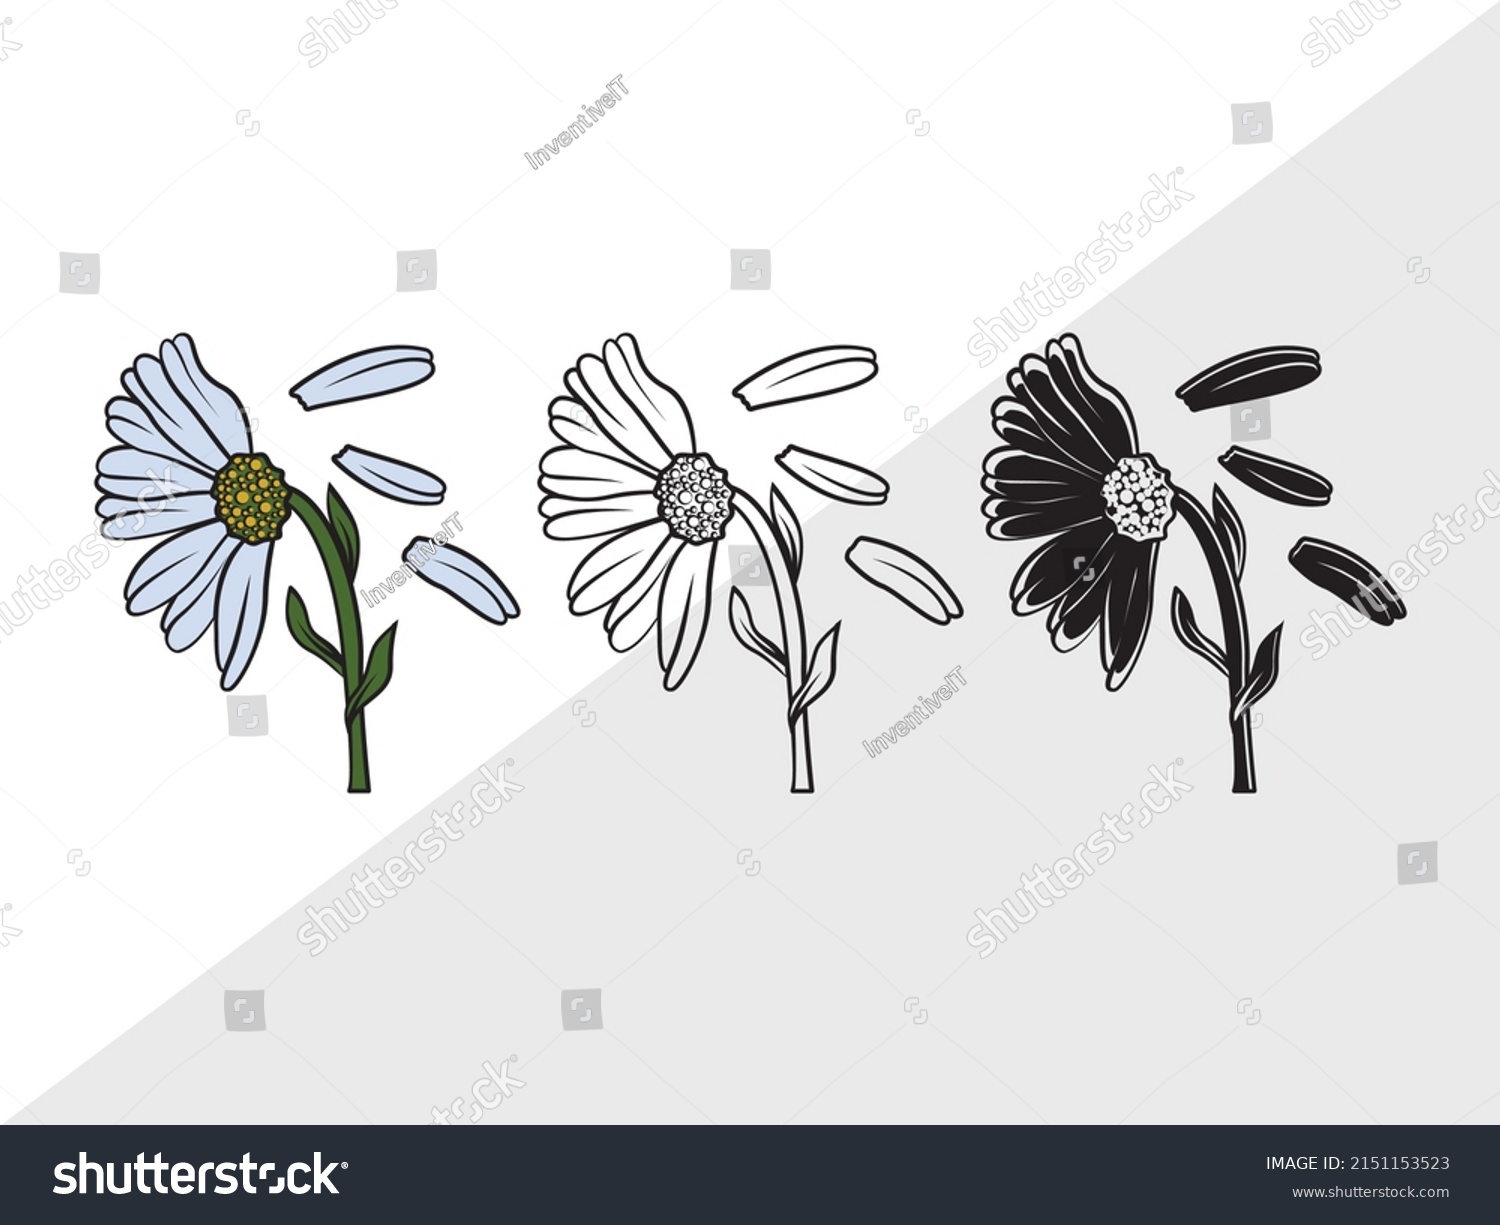 SVG of Daisy Flower Printable Vector Illustration svg